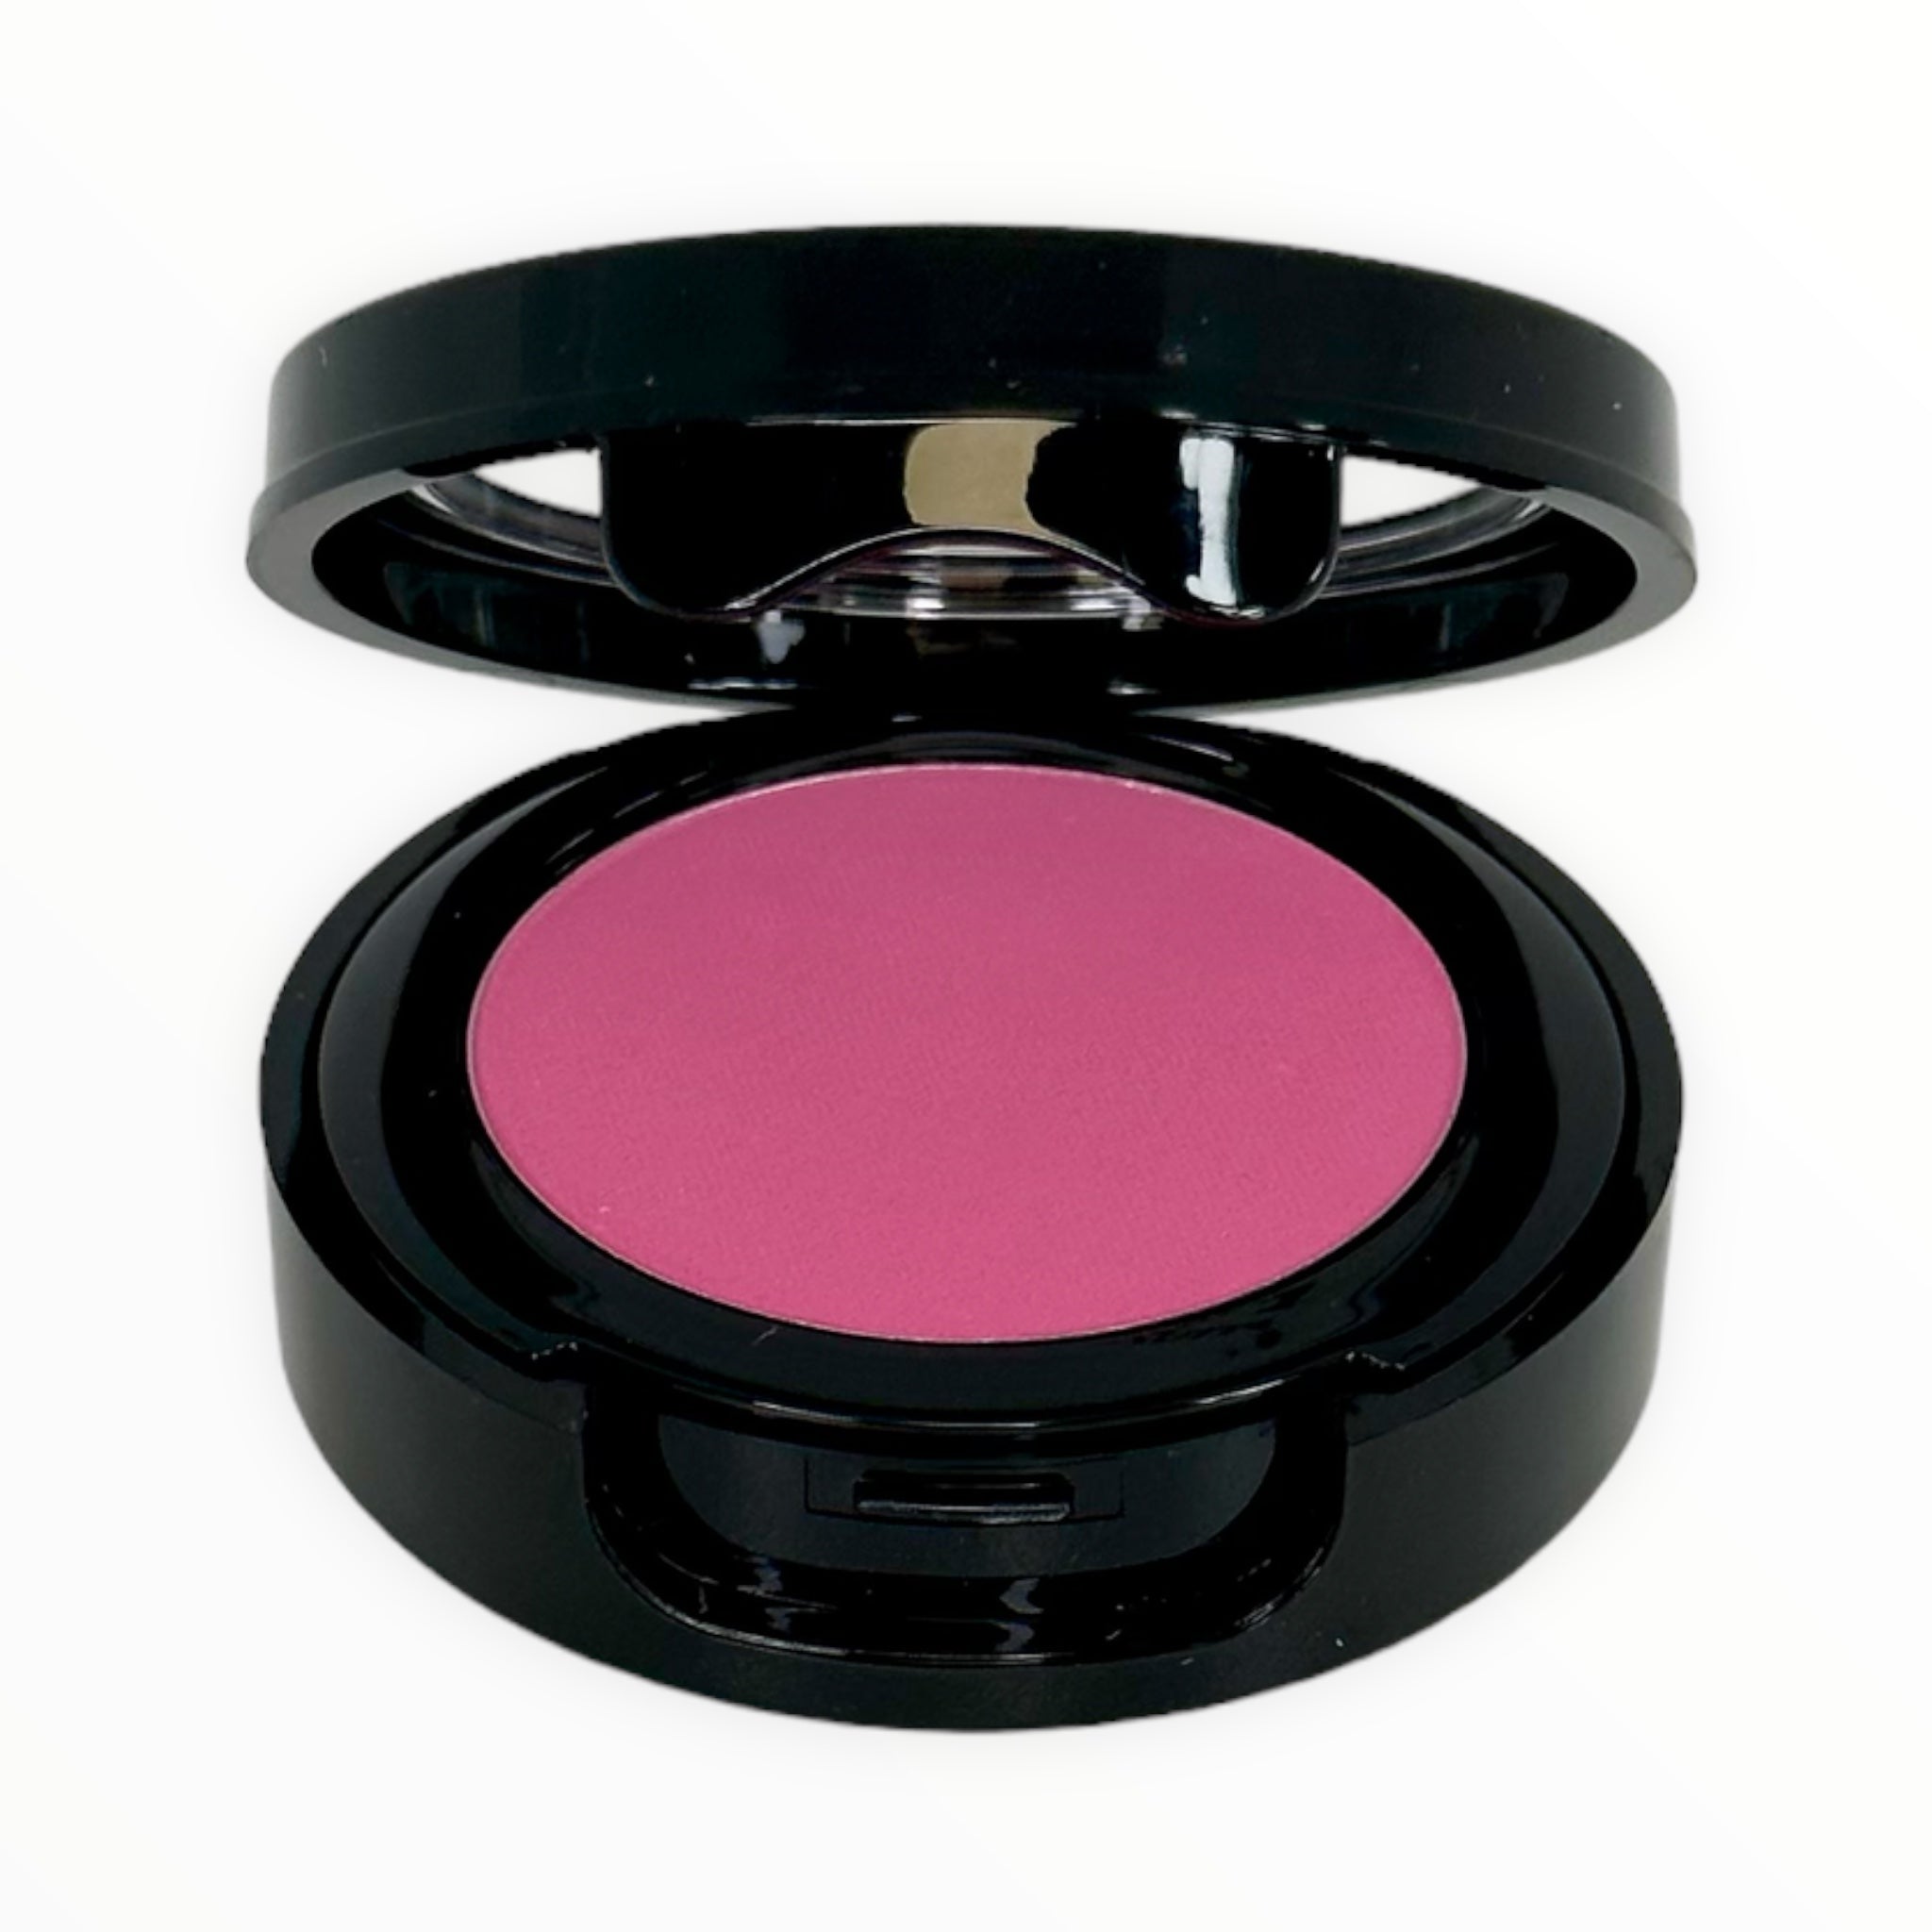 The cool bubblegum pink blush trend on light neutral olive skin